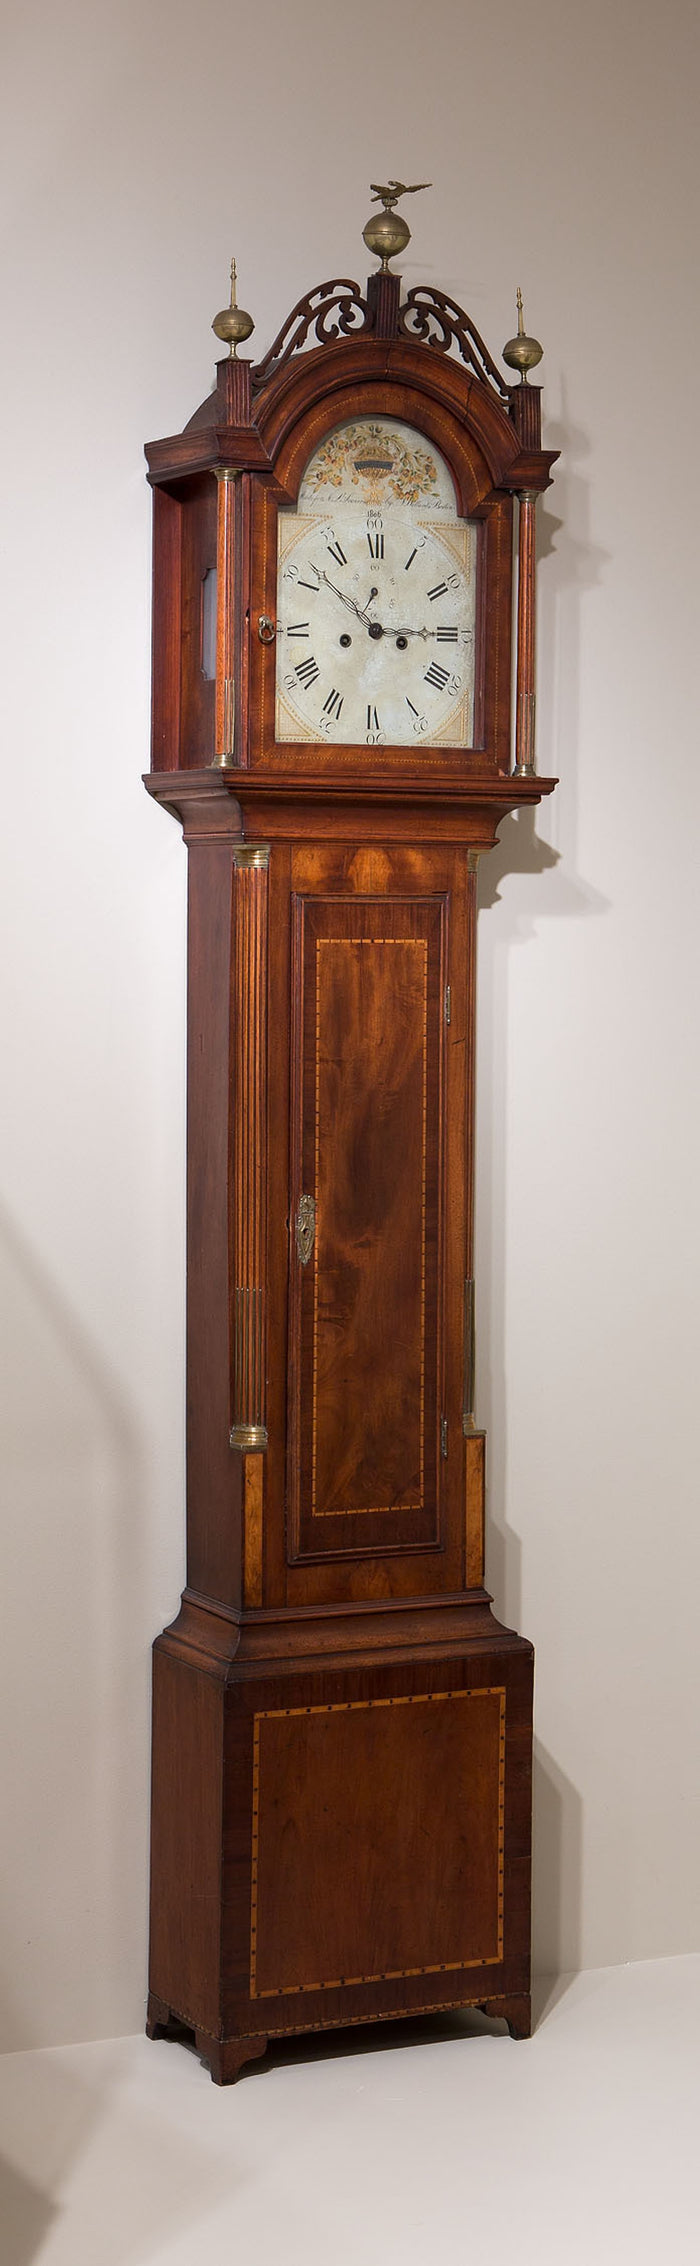 Tall Case Clock: Works: Aaron Willard,16x12